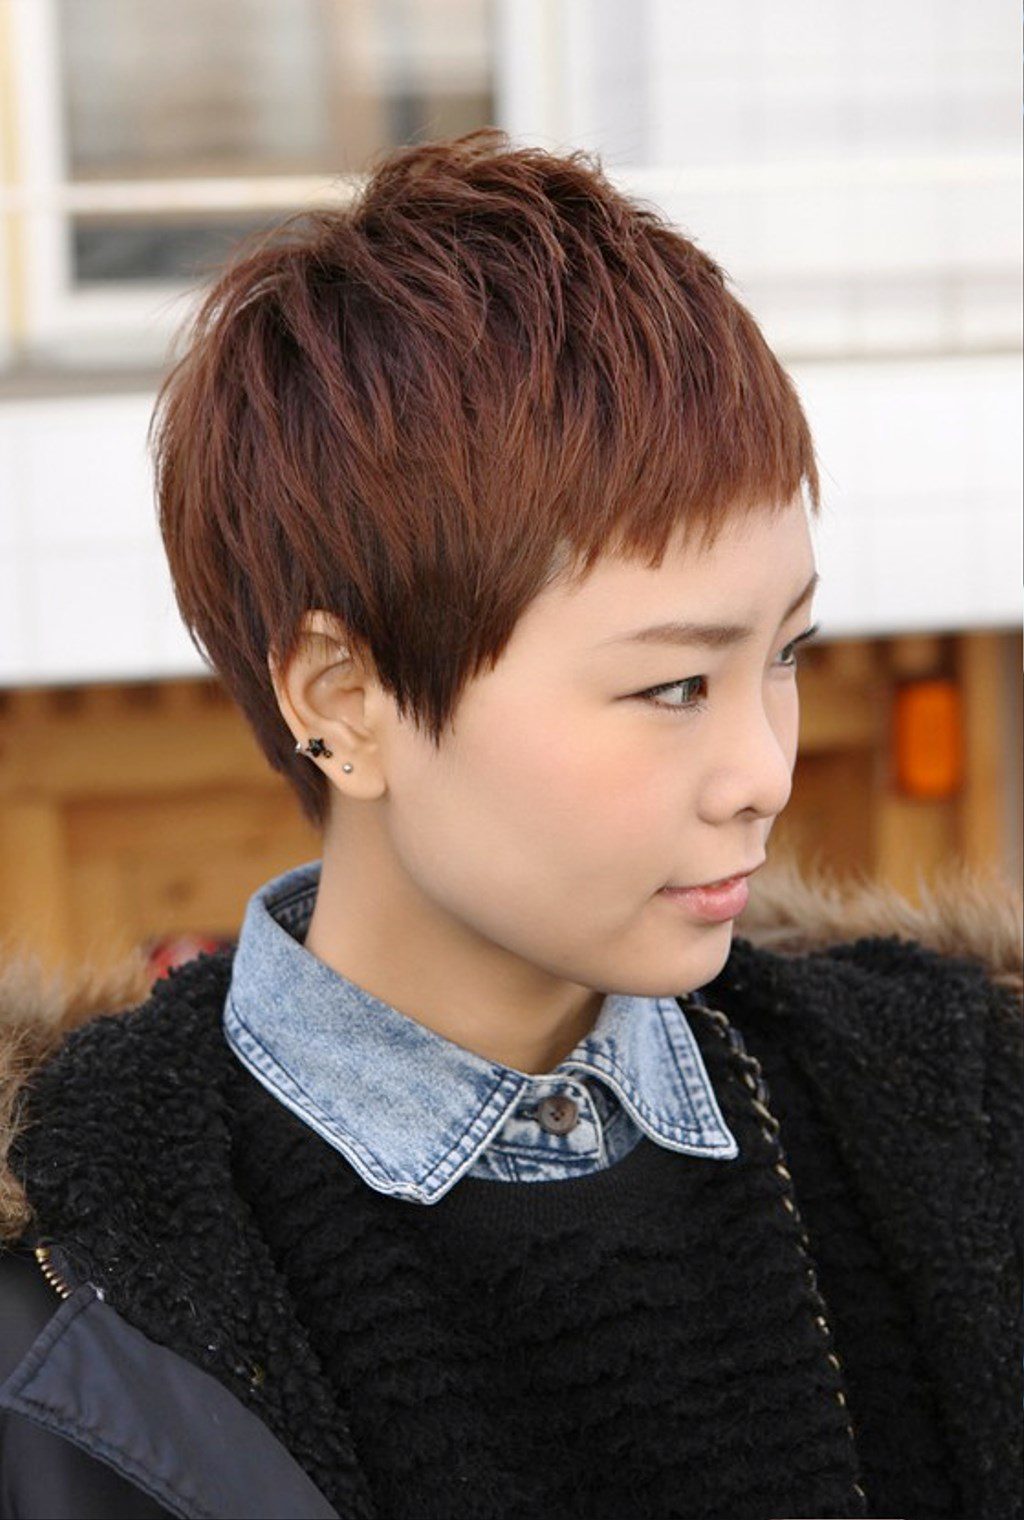 Short Boyish Asian Hairstyle For Women